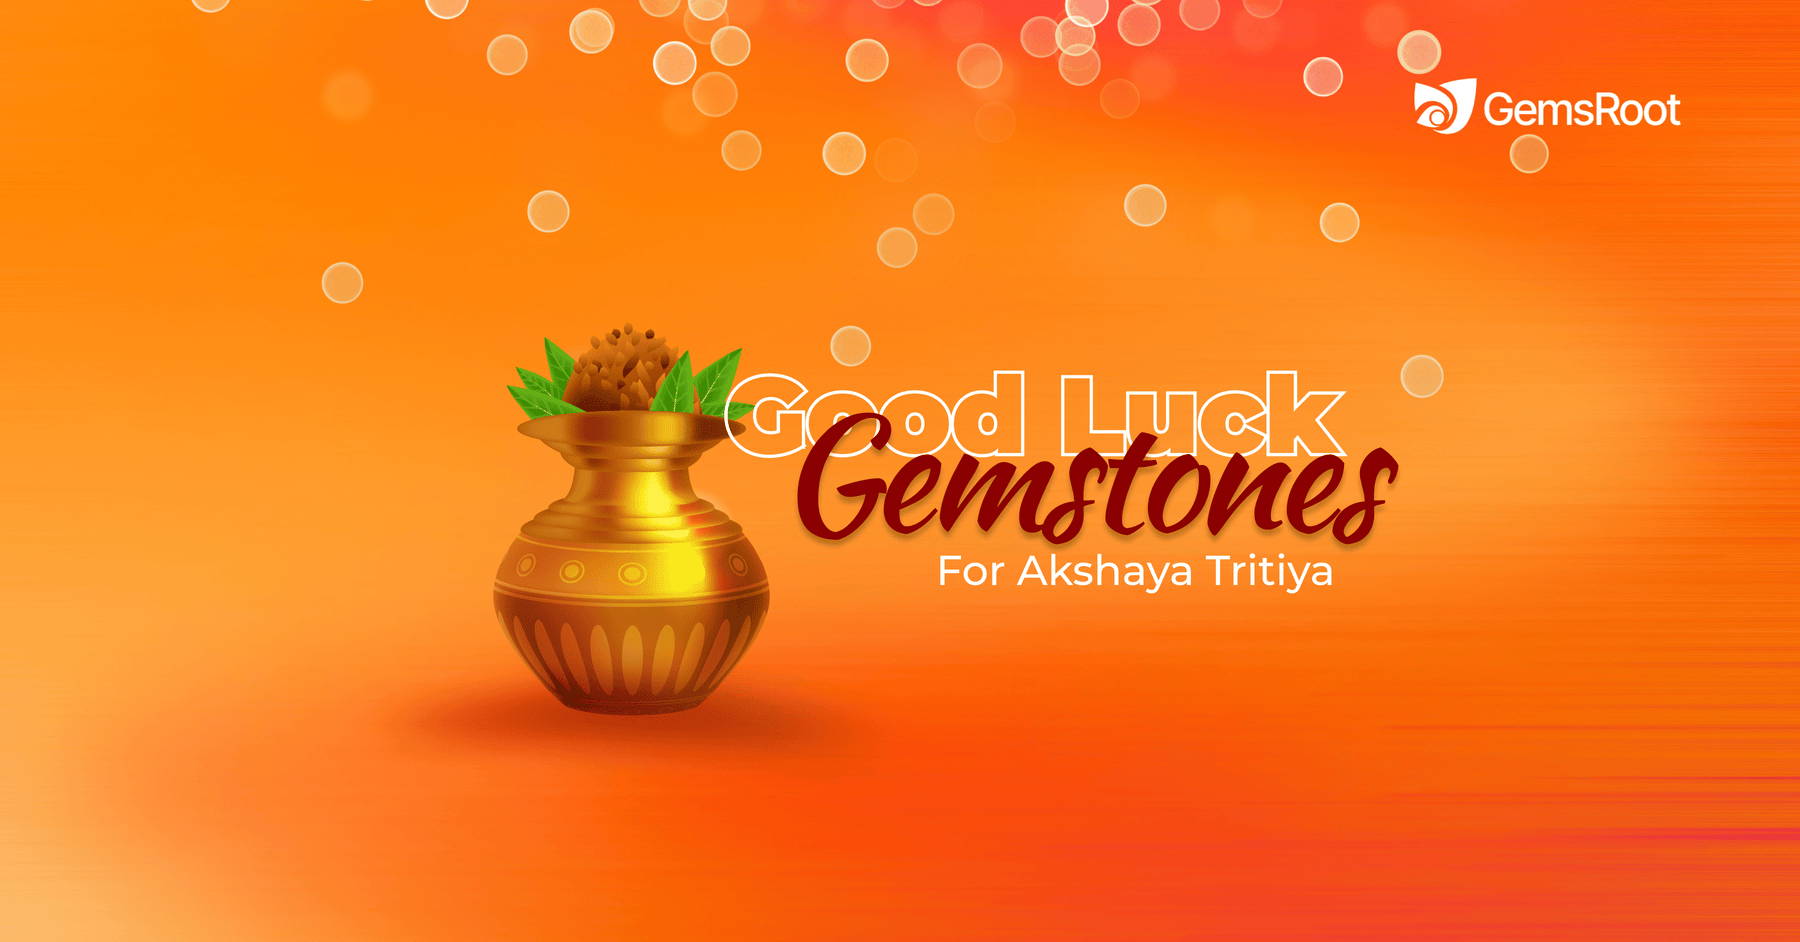 Good Luck Gemstones for Akshaya Tritiya